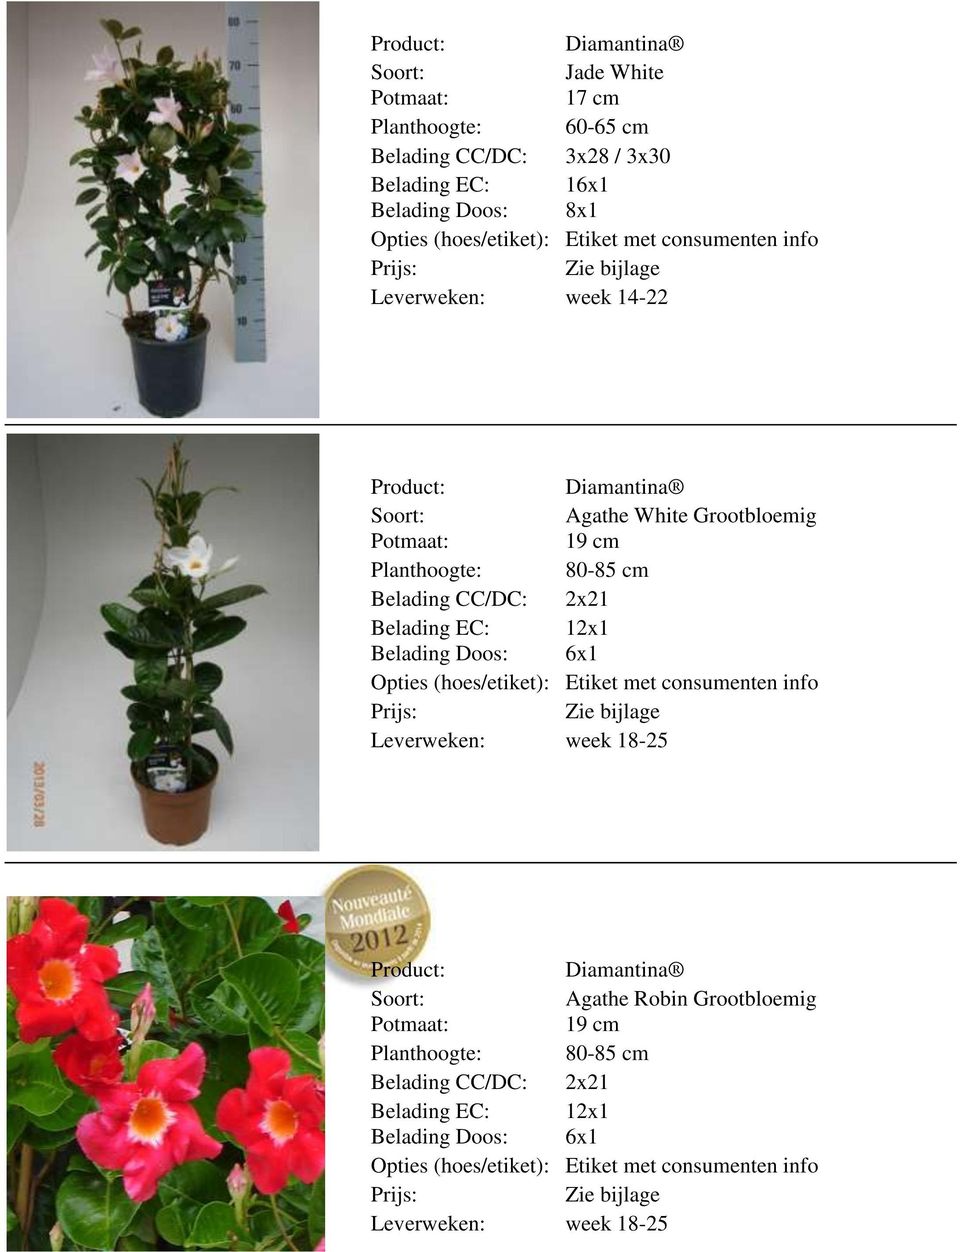 Planthoogte: 80-85 cm Belading CC/DC: 2x21 met Leverweken: week 18-25 Diamantina